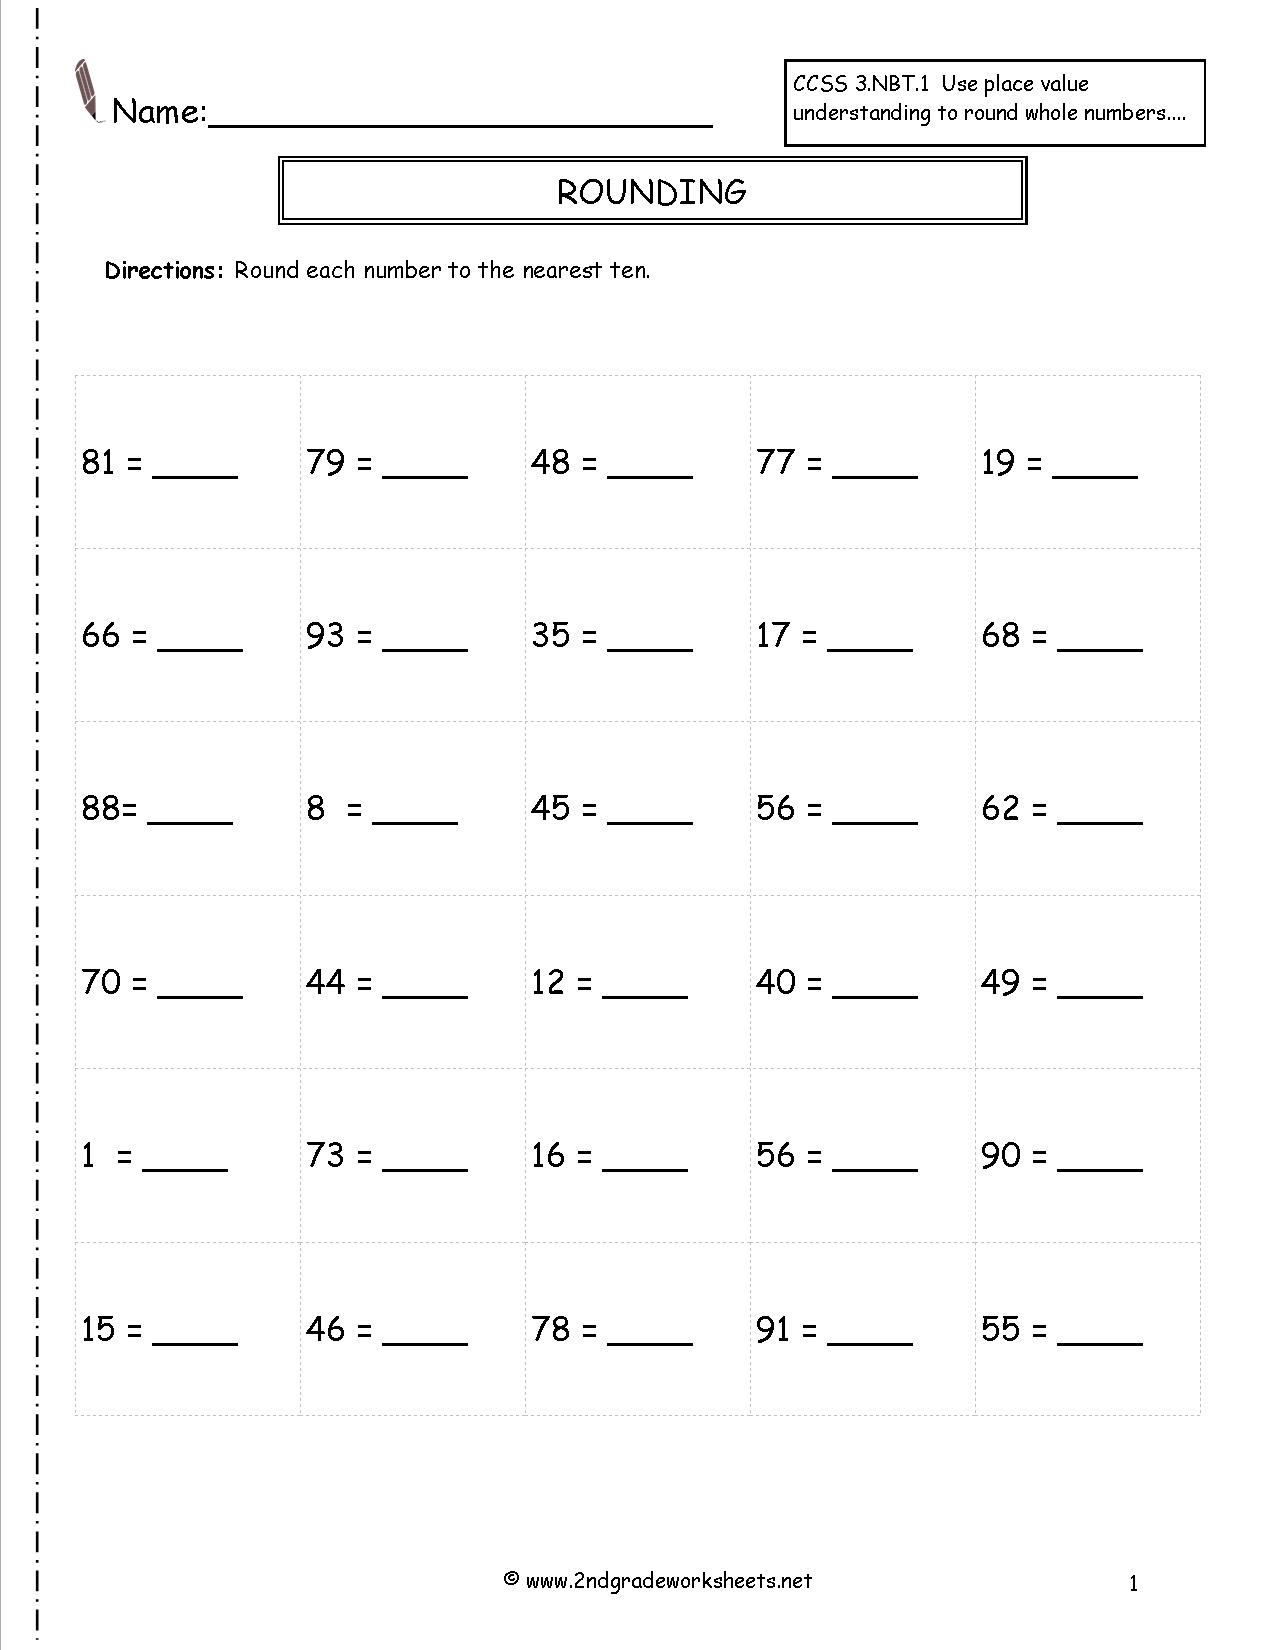 Rounding Whole Numbers Worksheets | Rounding Numbers Printable Worksheets